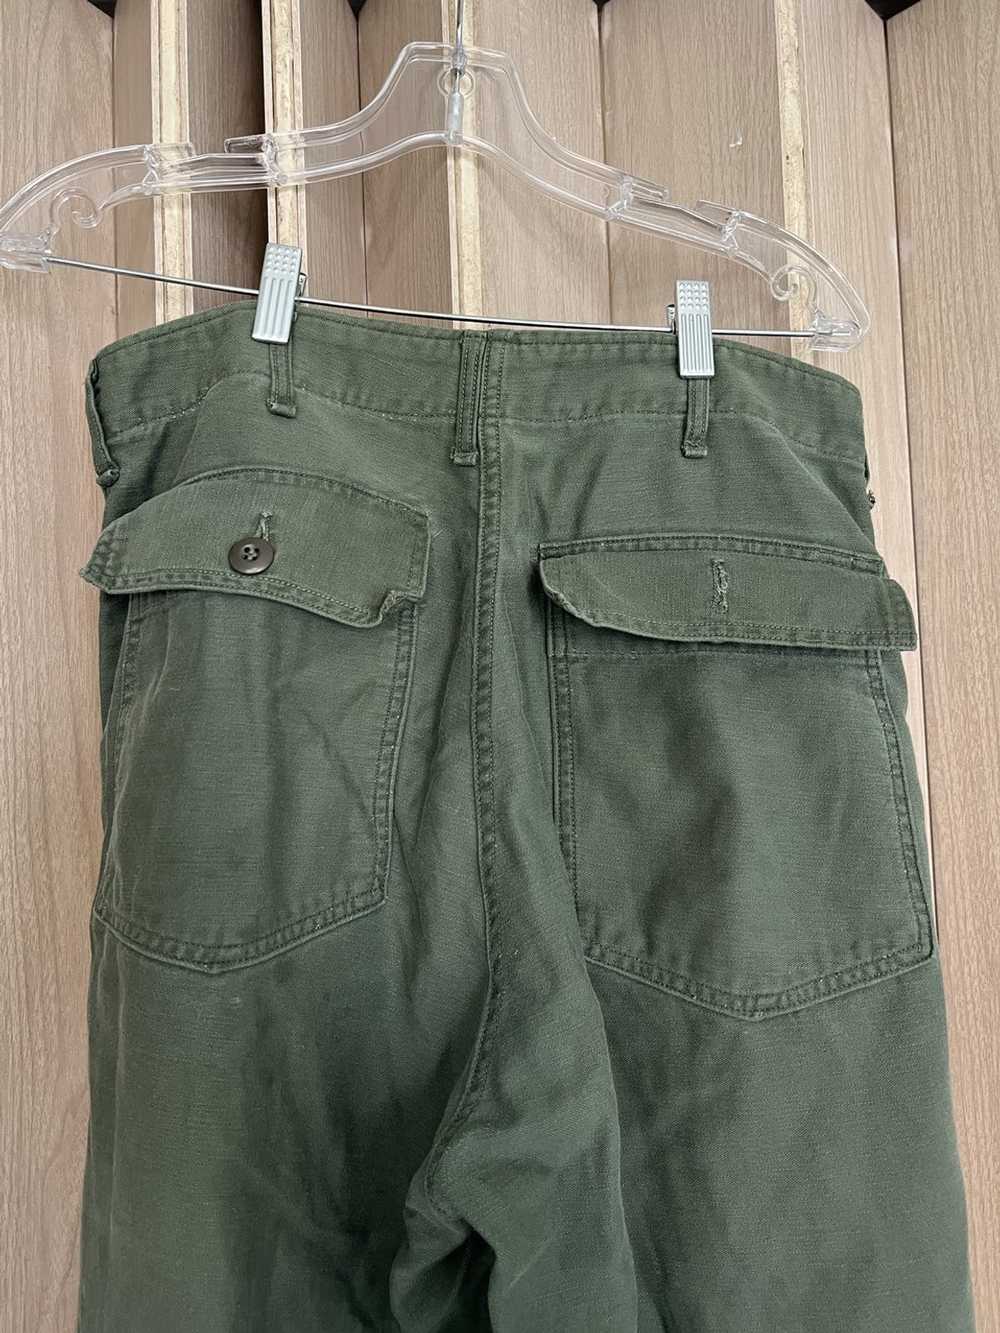 Vintage Vintage green army trouser pants - image 7